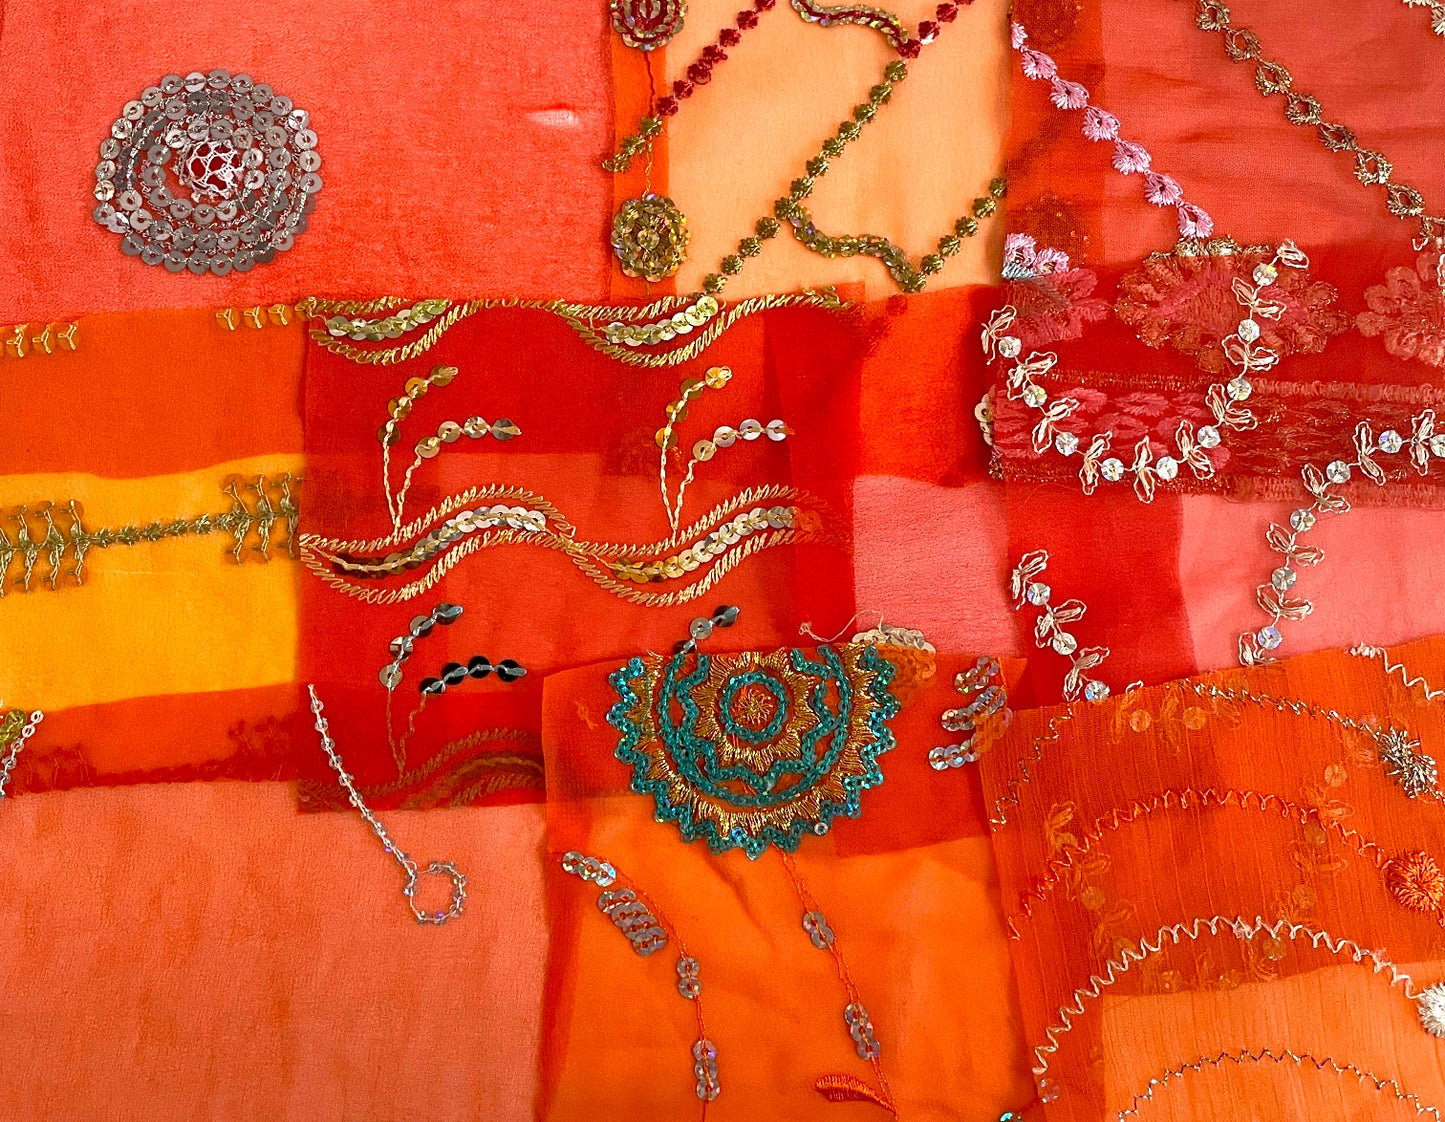 Orange Assorted Embellished Sari Fabric Remnants Scraps - 10 Pieces